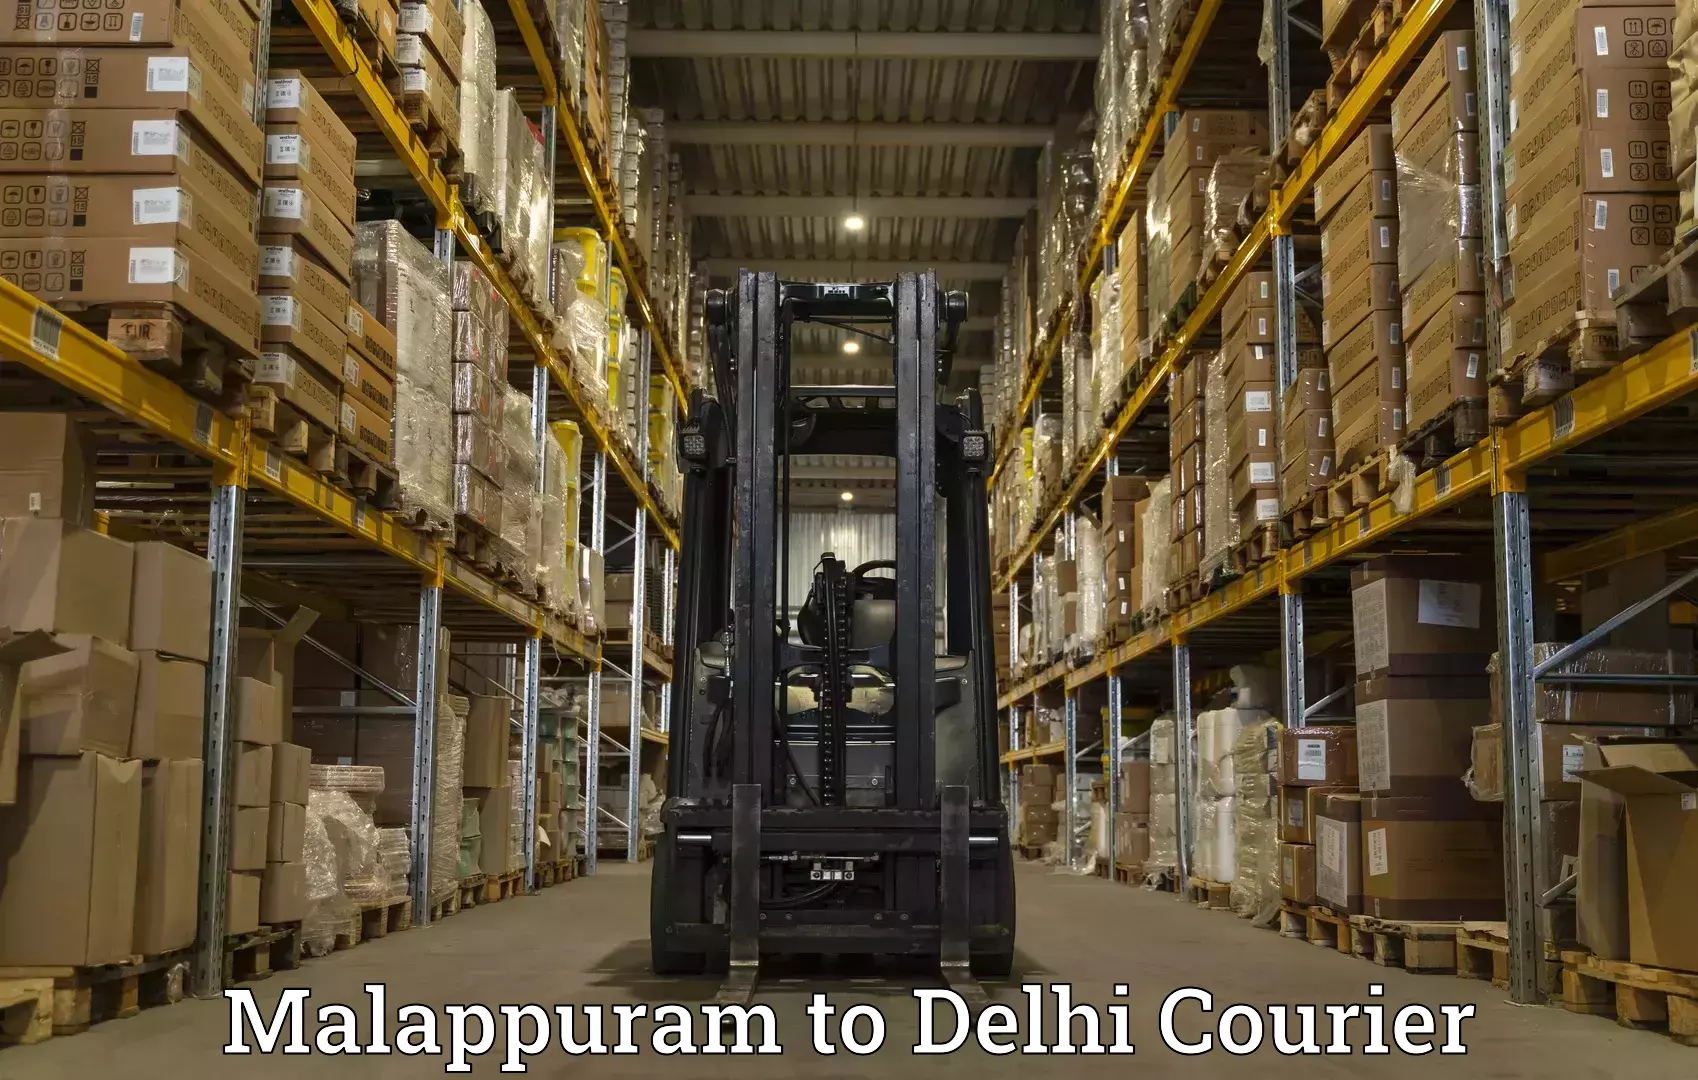 Express courier facilities Malappuram to NCR